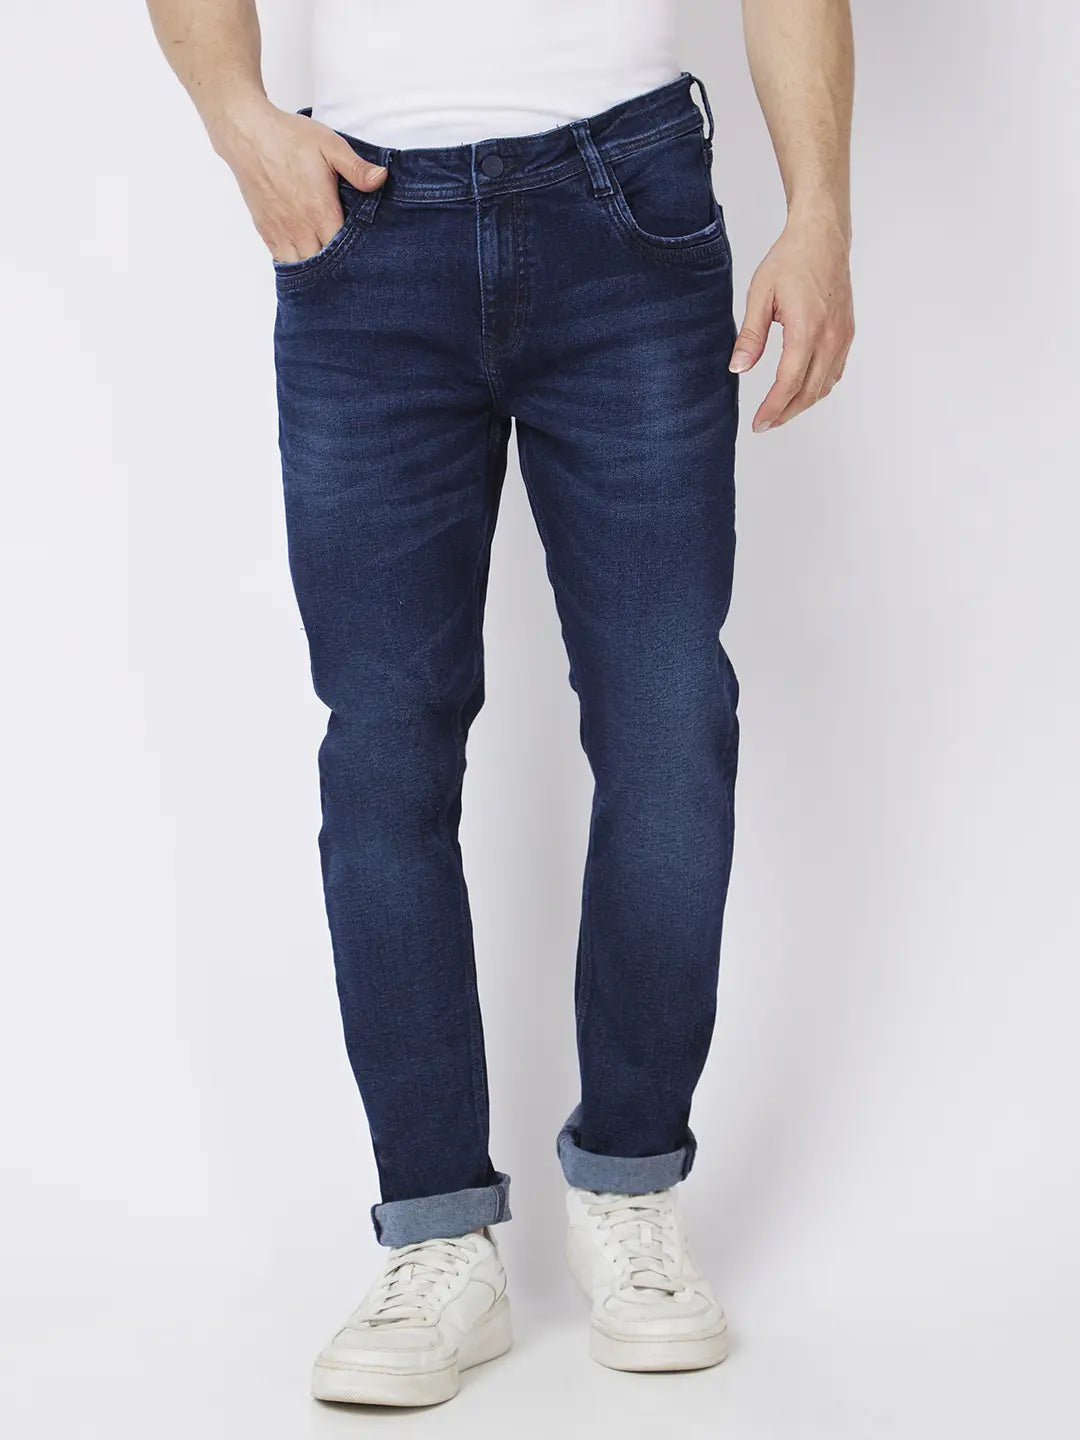 Men Causal Skinny Jeans, Fashion Solid Low-Waist Slim-Fit Denim Pants  Streetwear, Light Blue/Black - Walmart.com